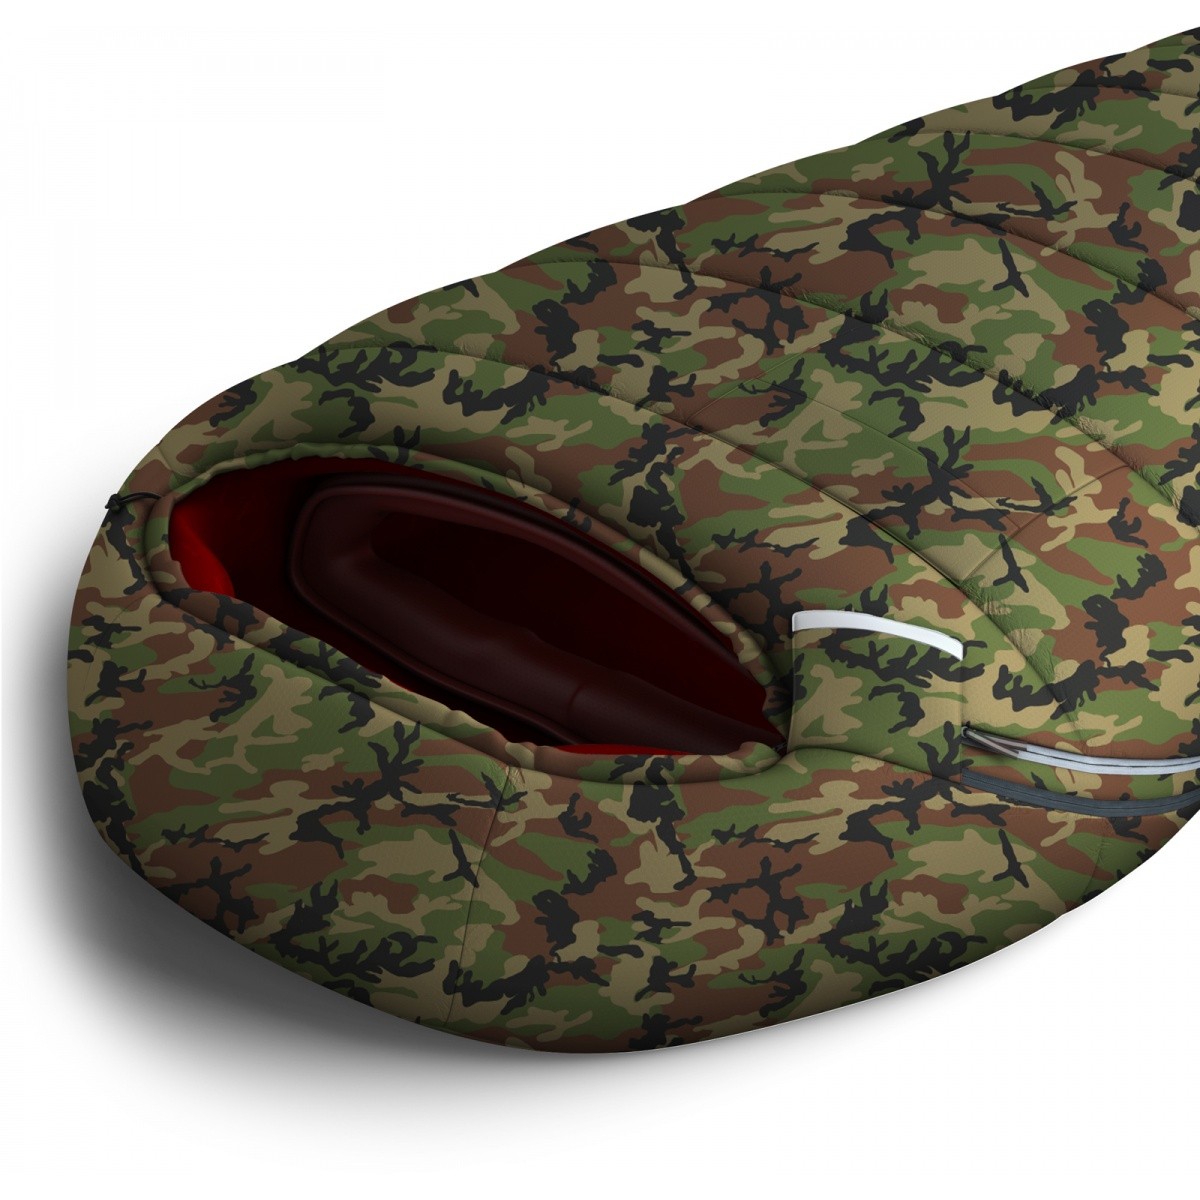 Спален чувал Army Camouflage -17 HUSKY - изглед 3